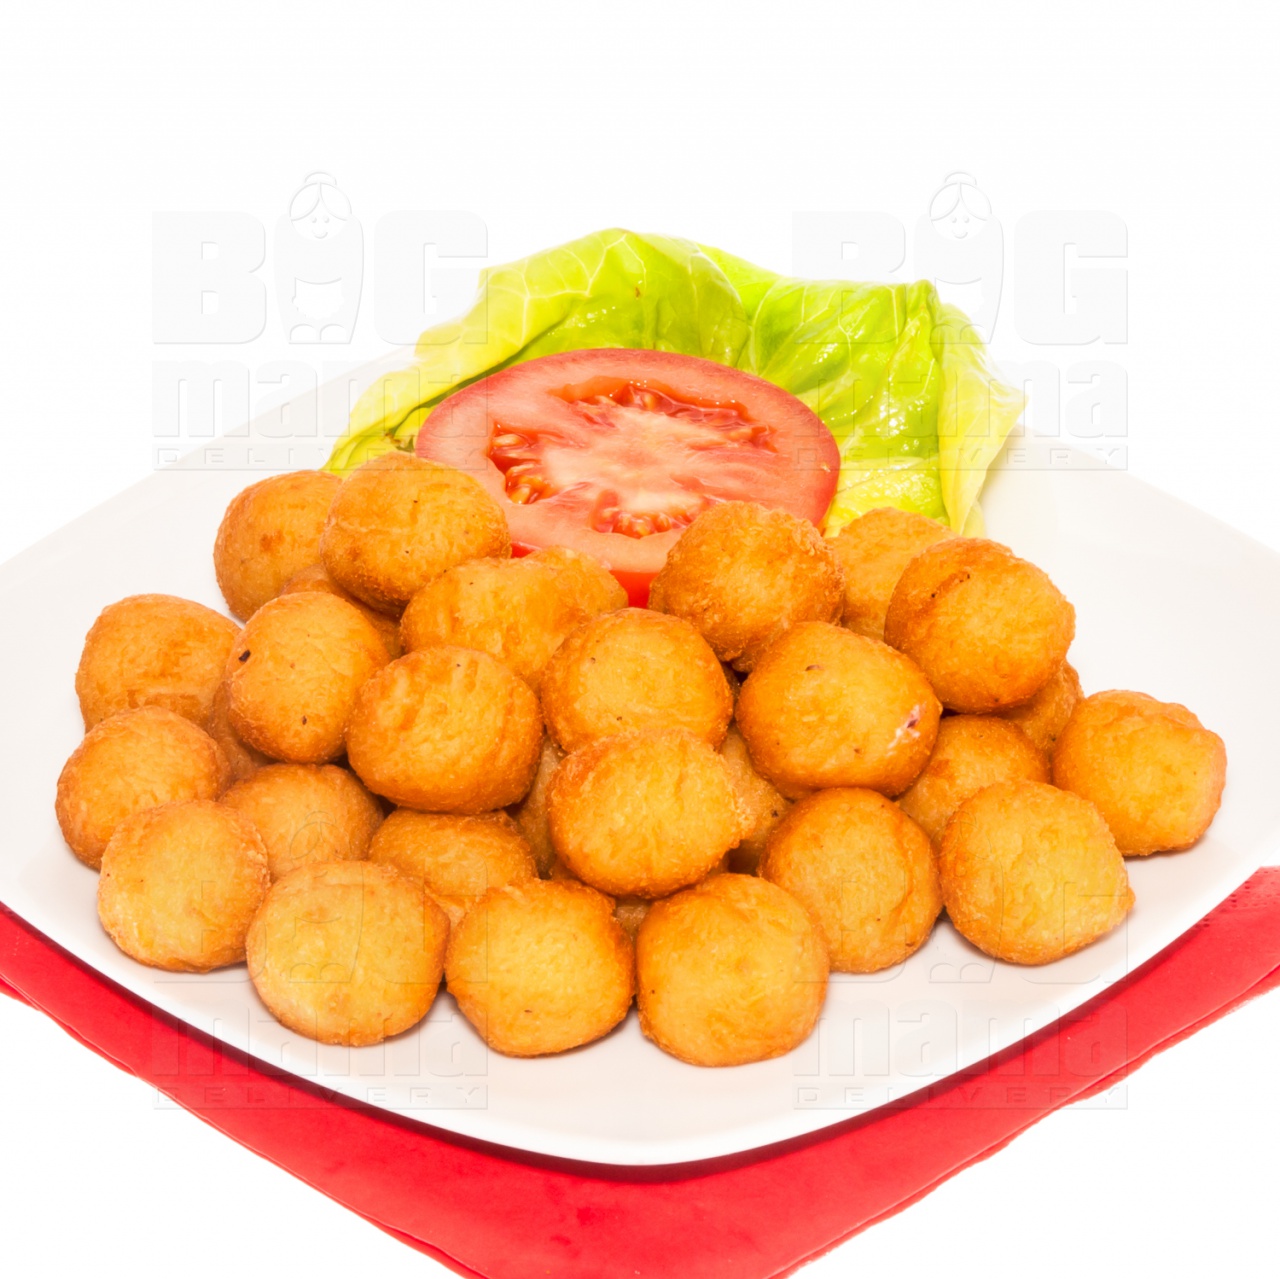 Product #180 image - Potato croquettes, half portion